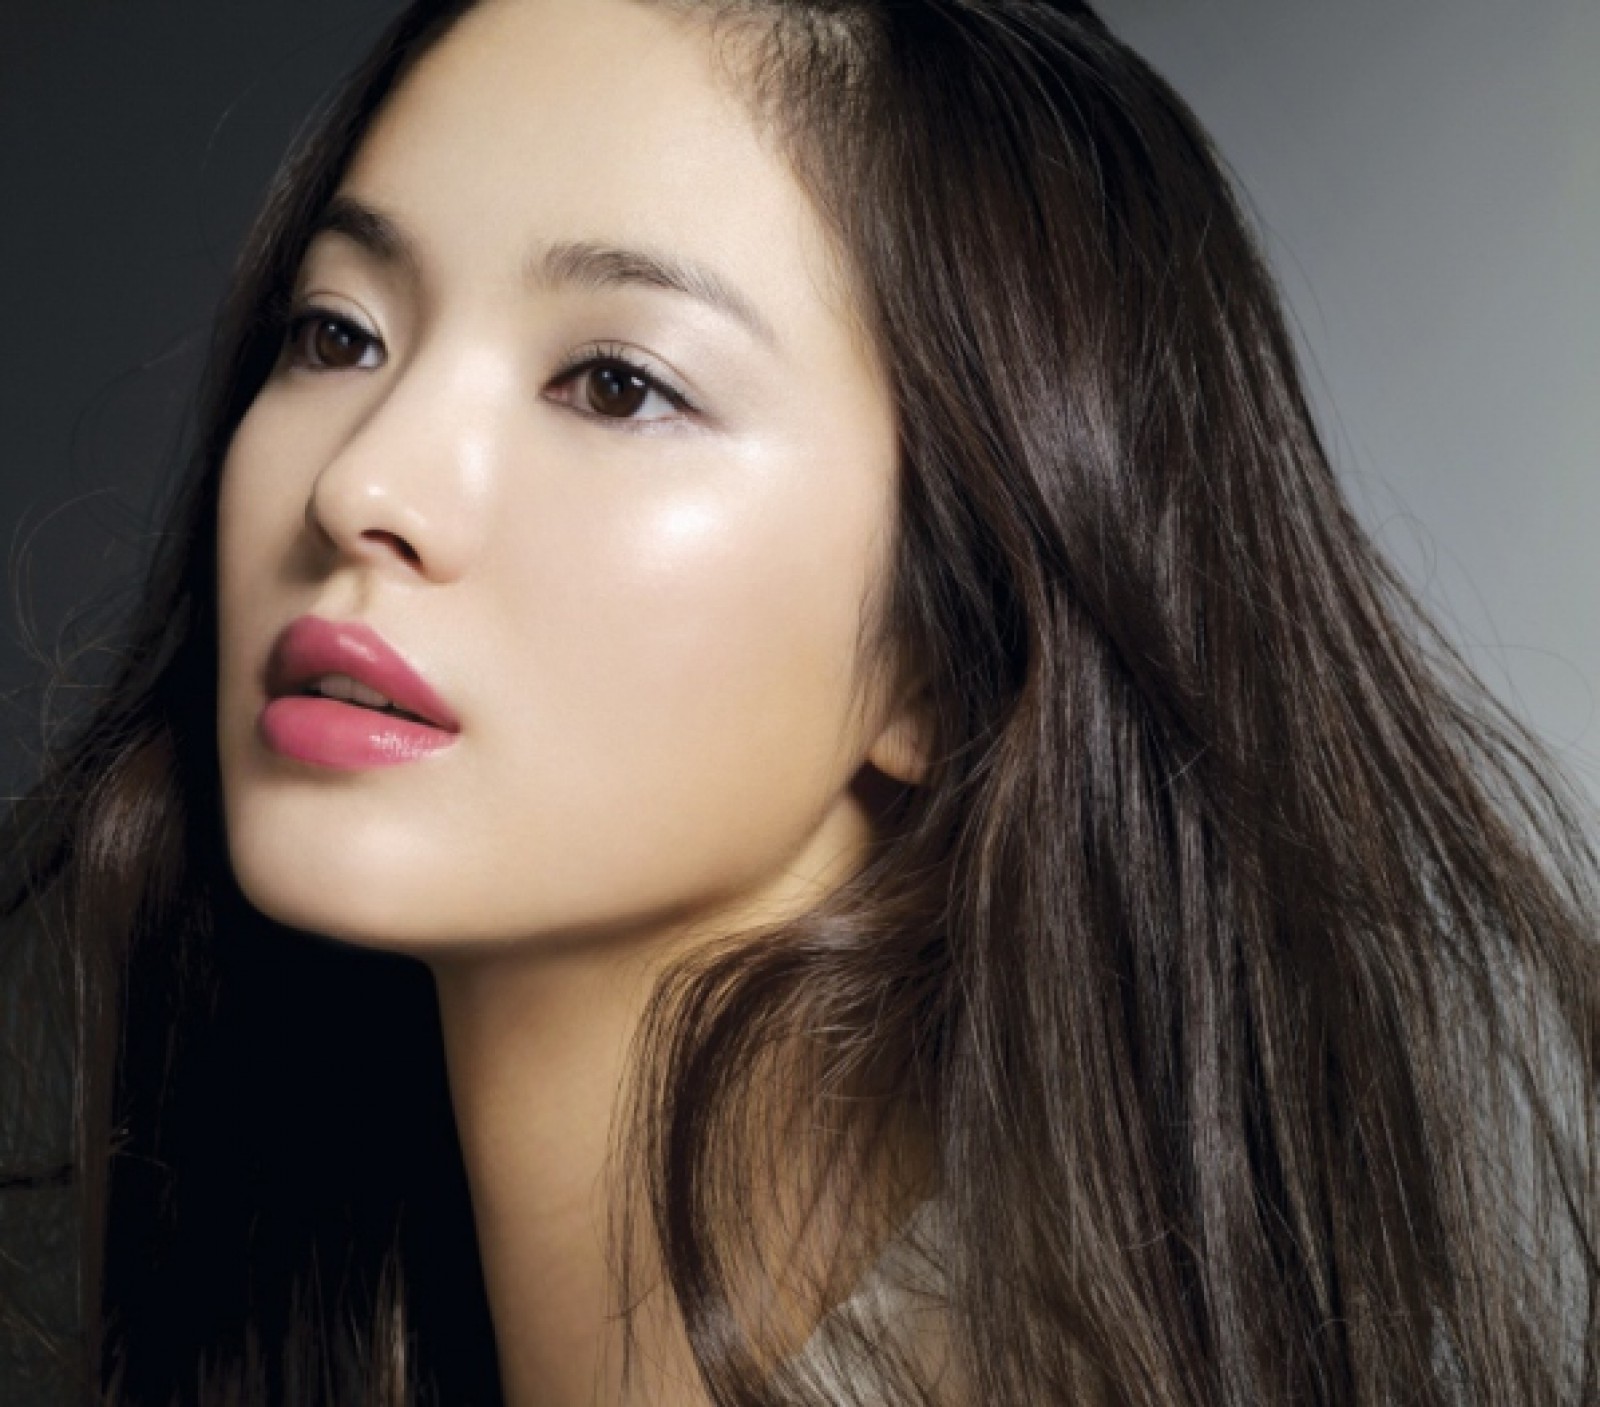 Song Hye Kyo young